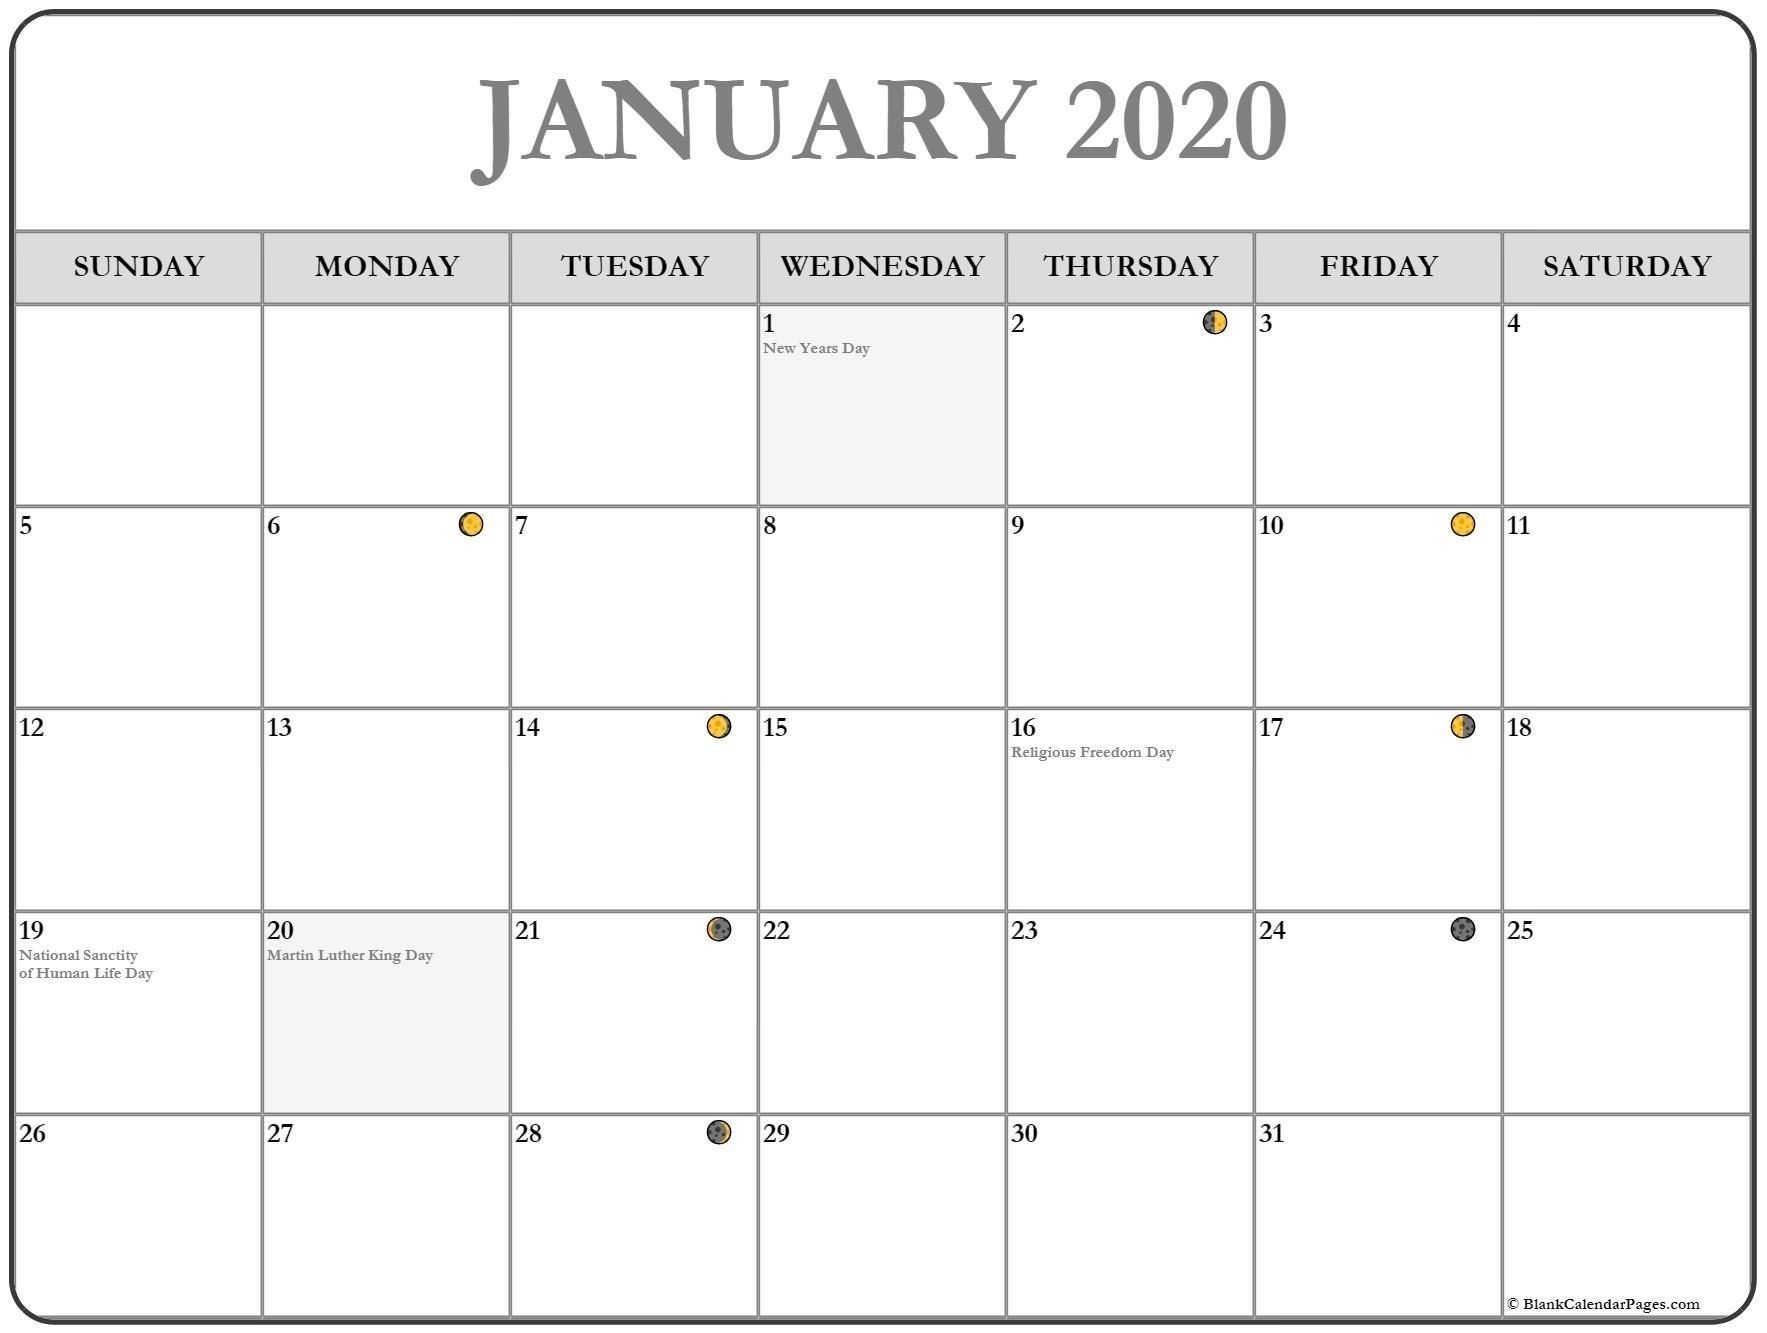 December 2019 January 2020 Calendar Printable | Calendar-January 2020 Calendar Printable Cute